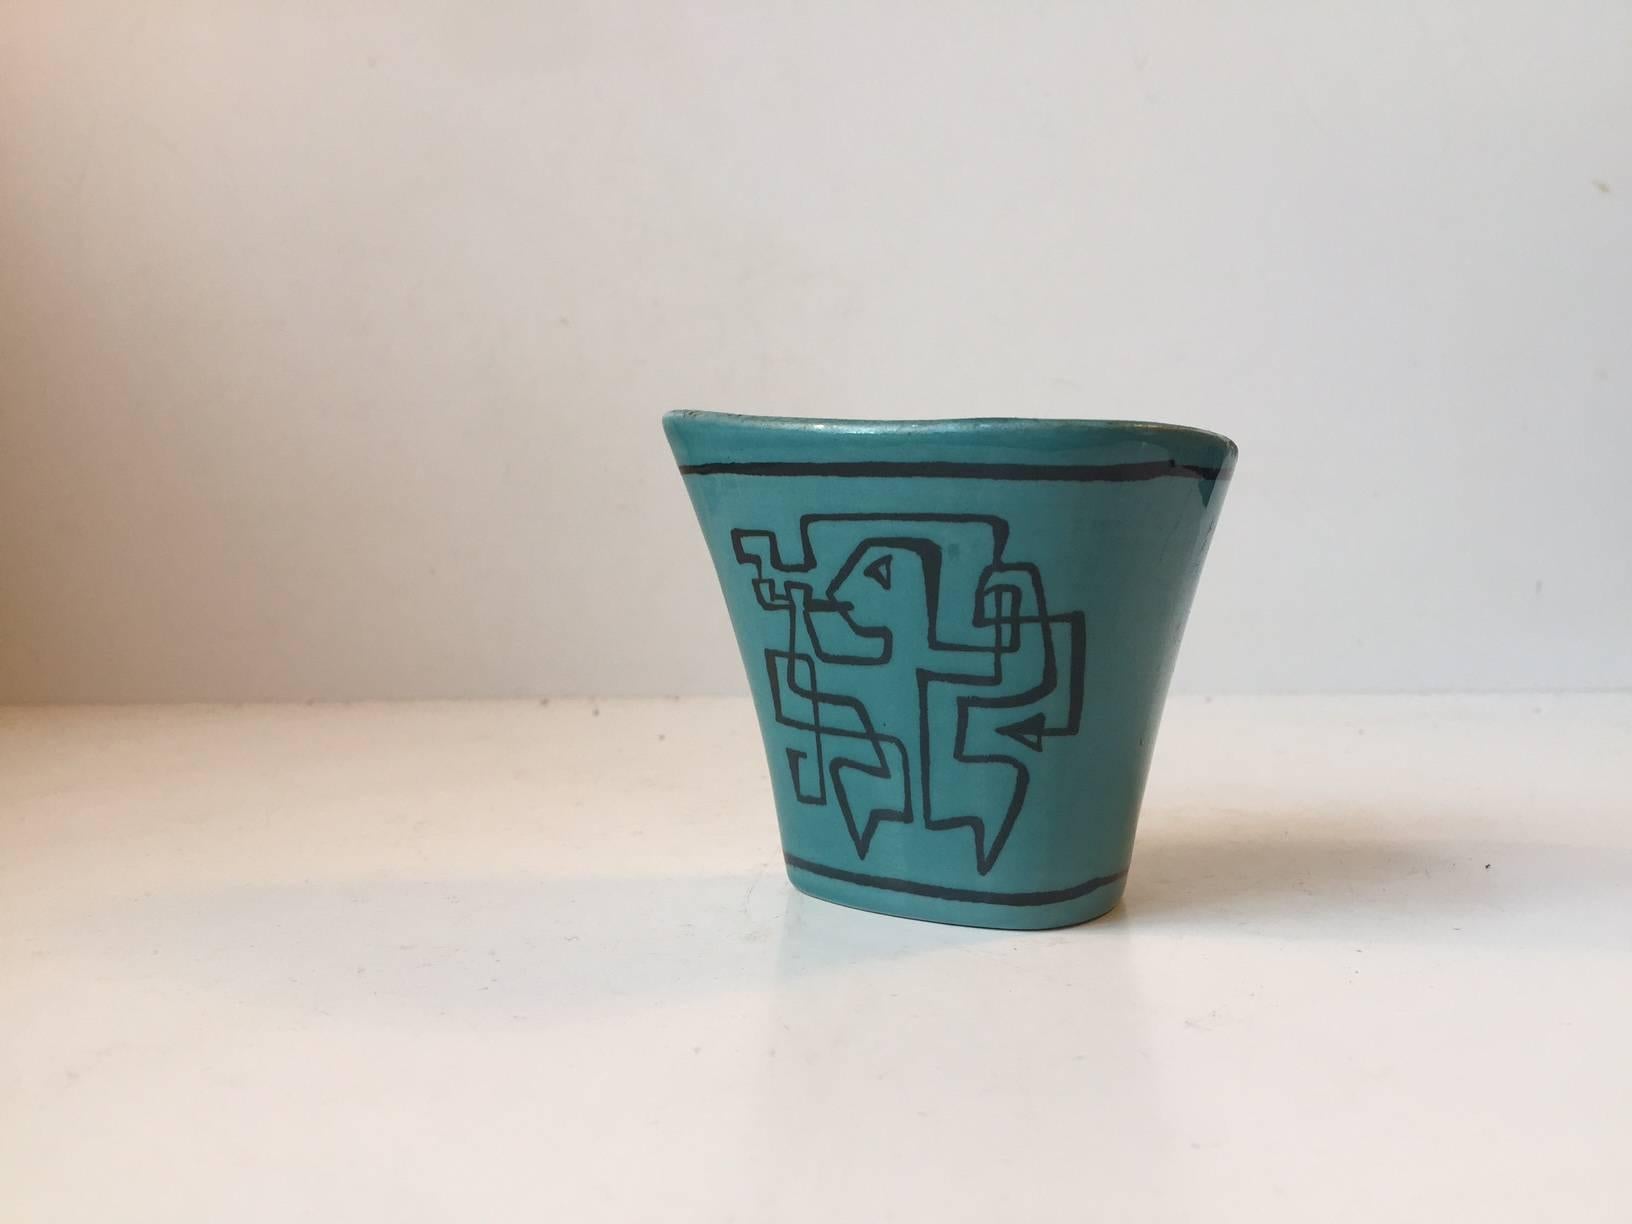 Pottery Unique Fastasia Avant-Garde Ceramic Vase by Gunnar Nylund, Nymølle Denmark, 1964